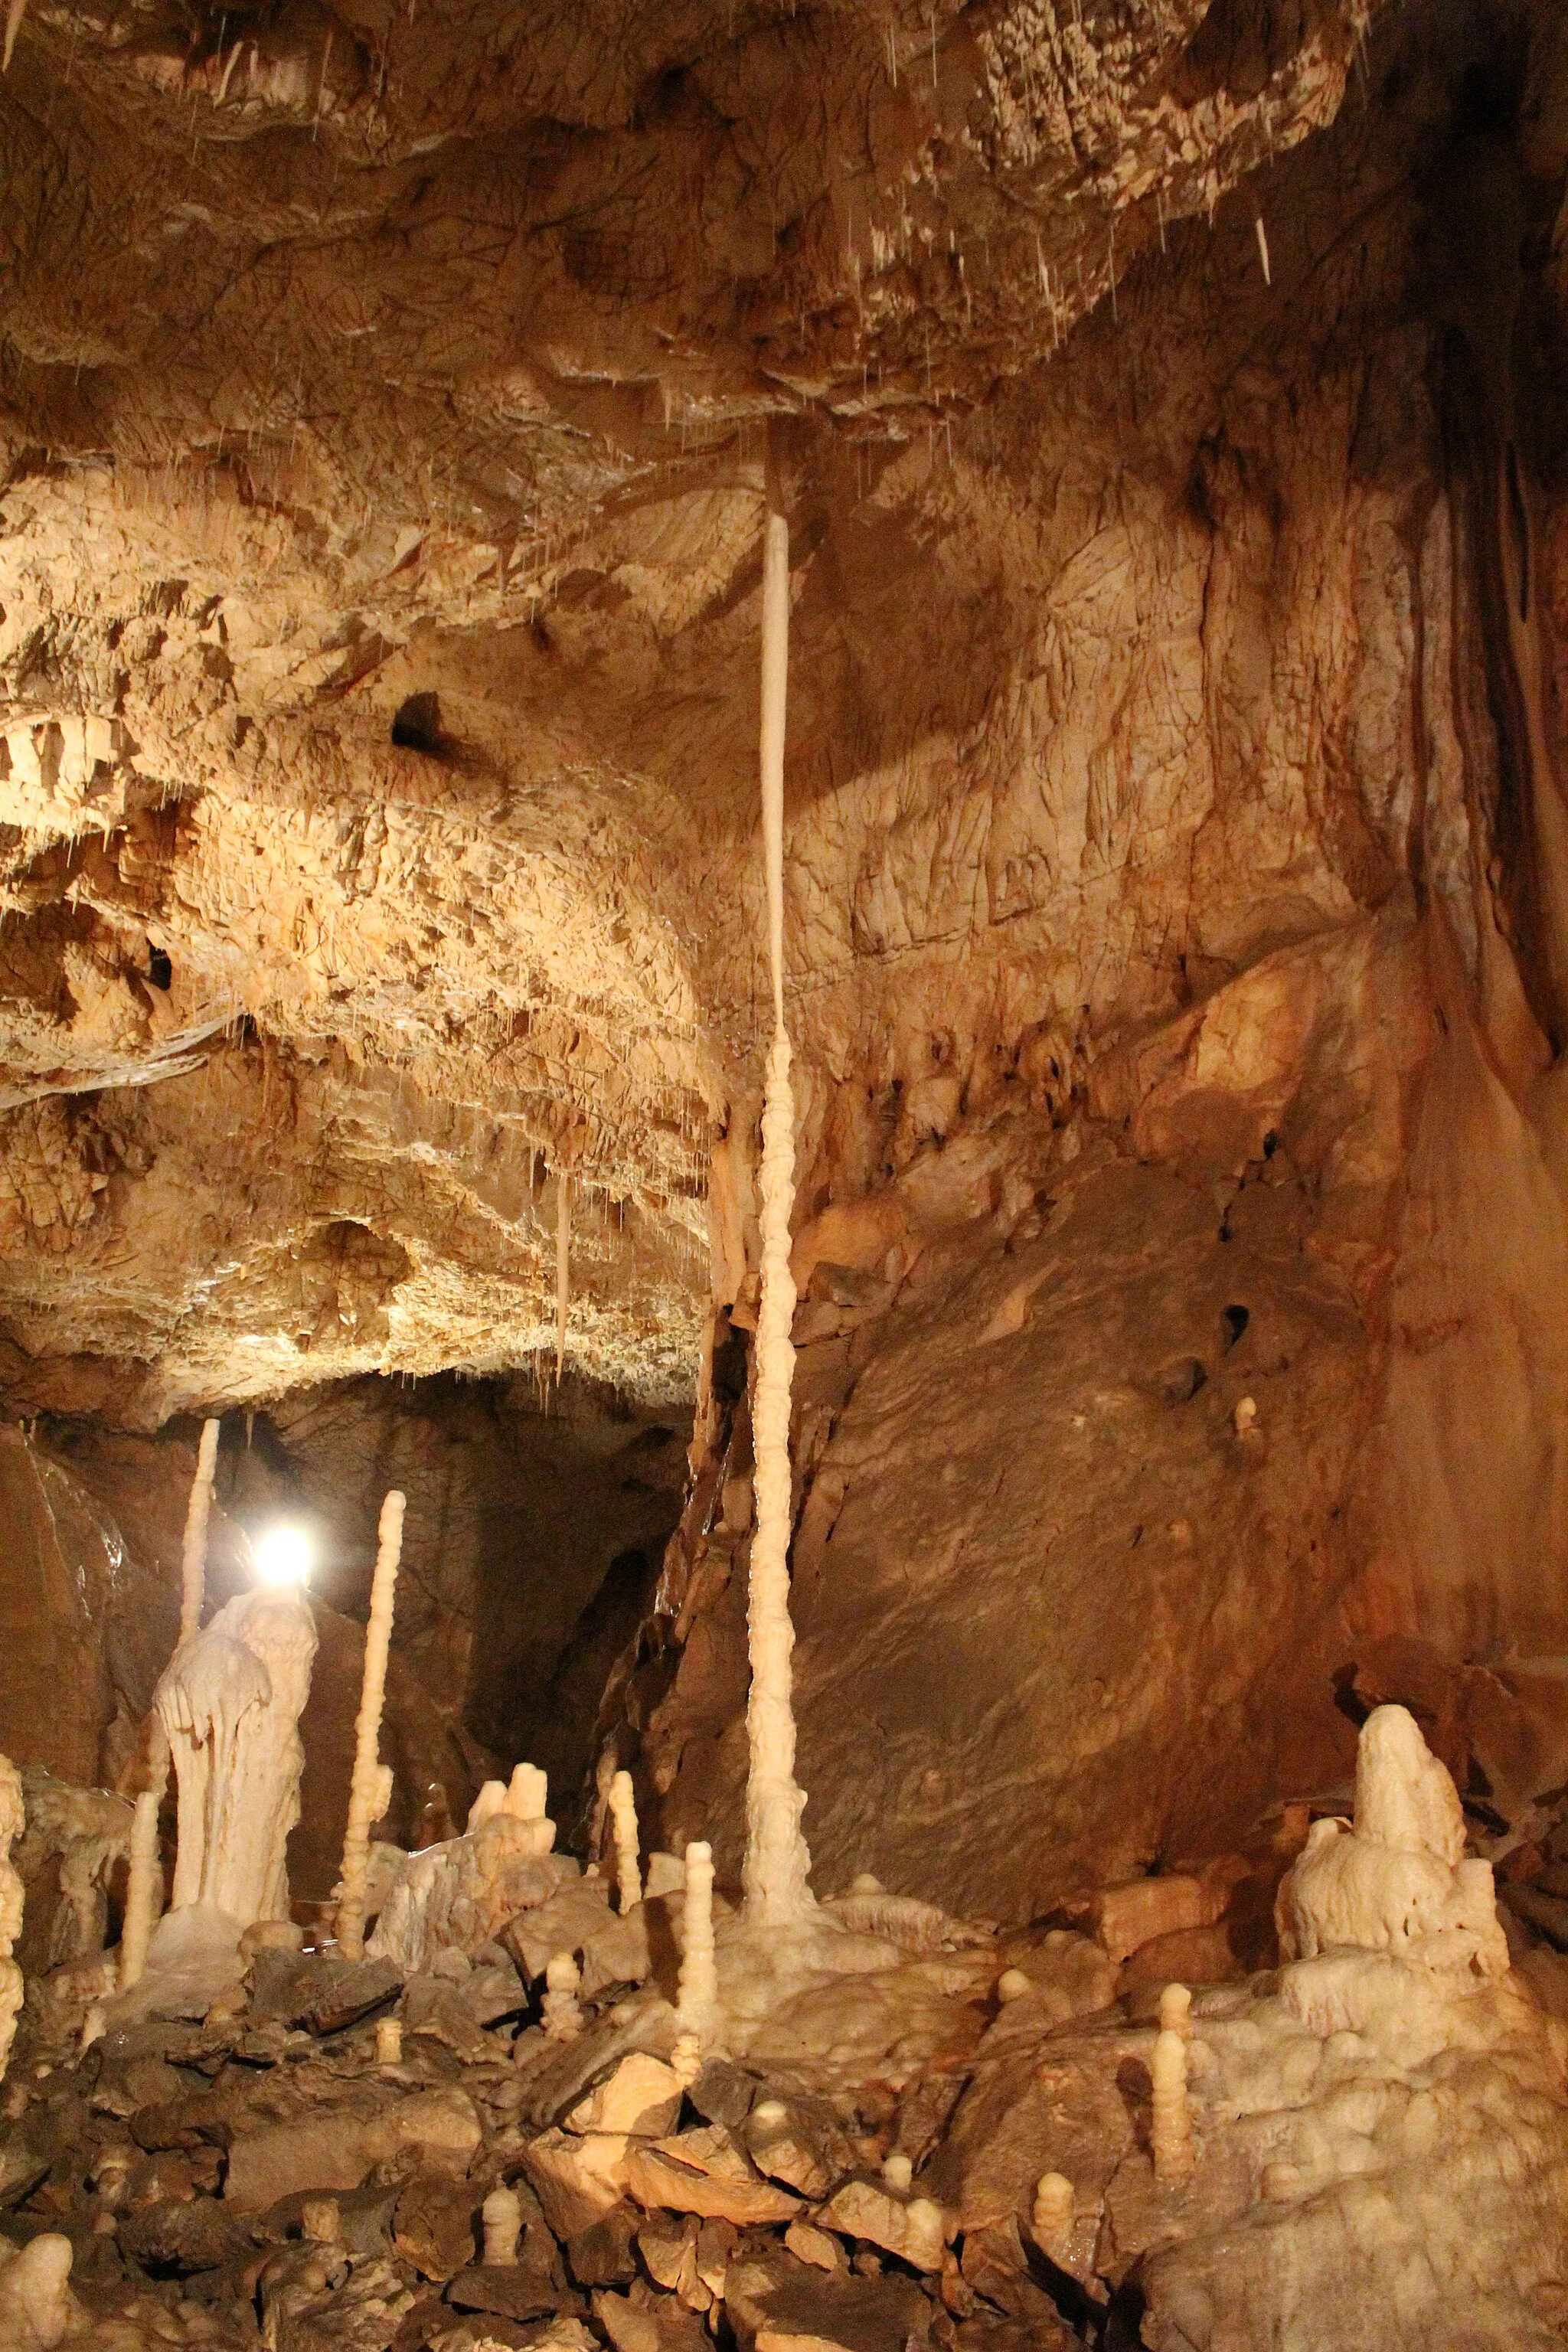 Photo showing: Pillar of dripstone (stalagnat) in the Bear Cave (Chișcău, Romania).